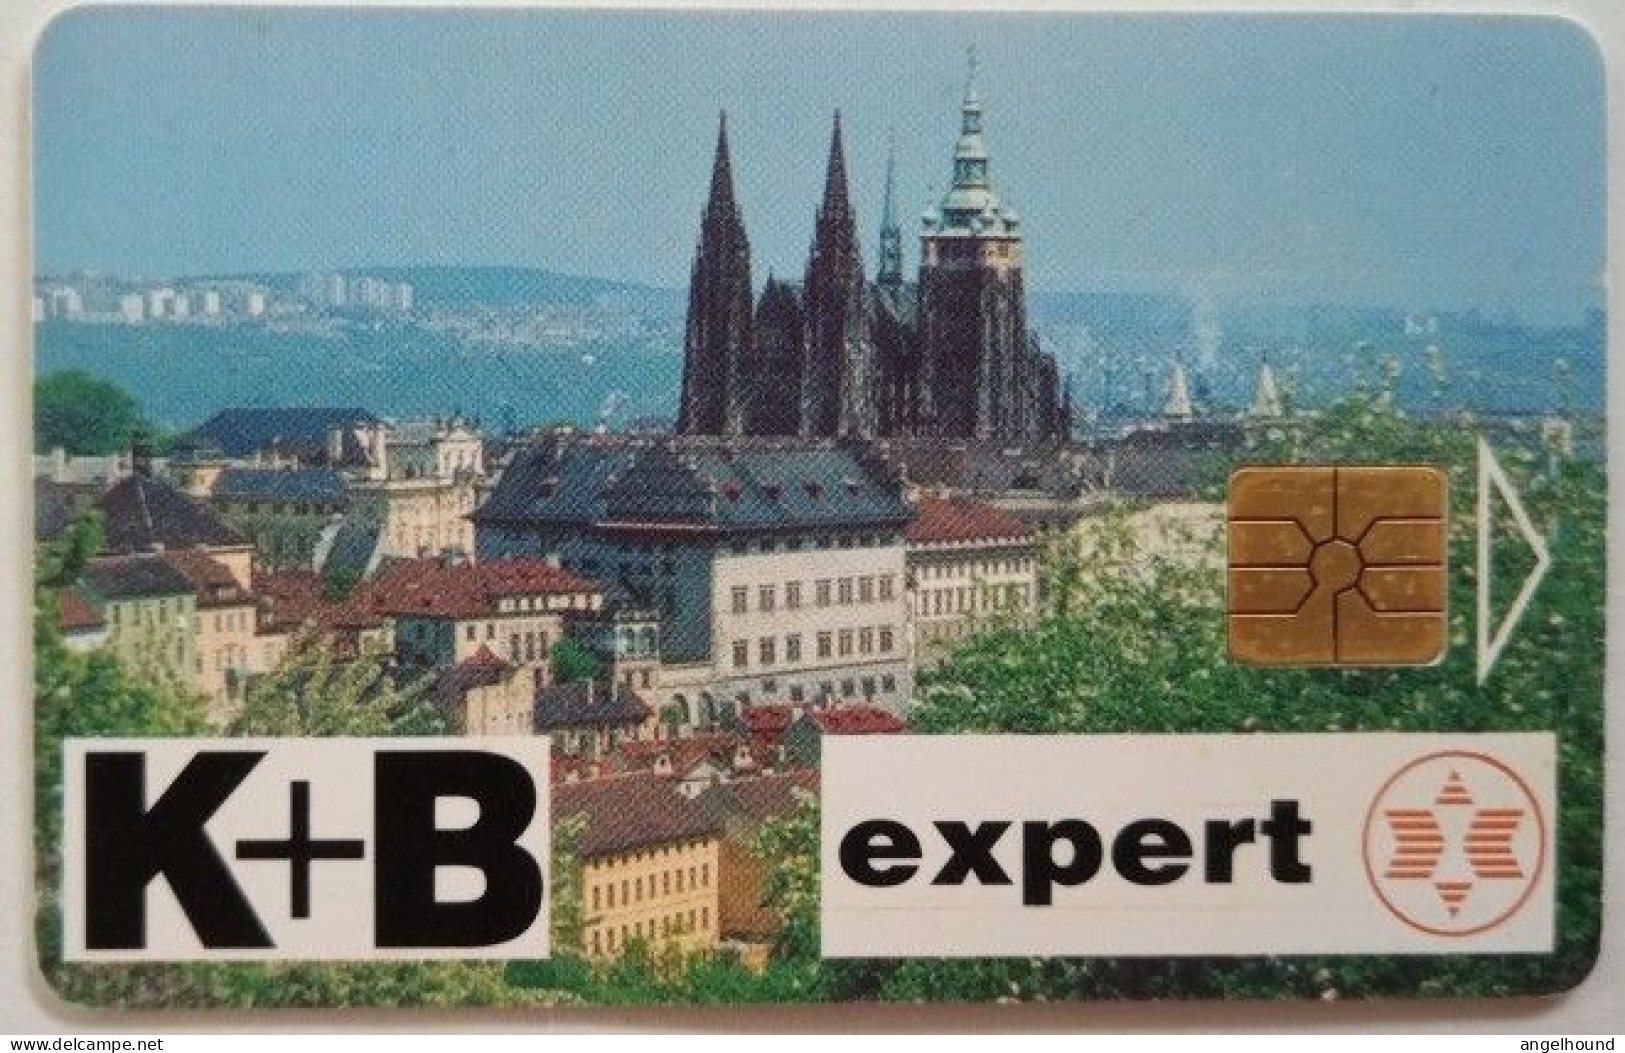 Czech Republic 50 Units Chip Card - K+B Expert - República Checa